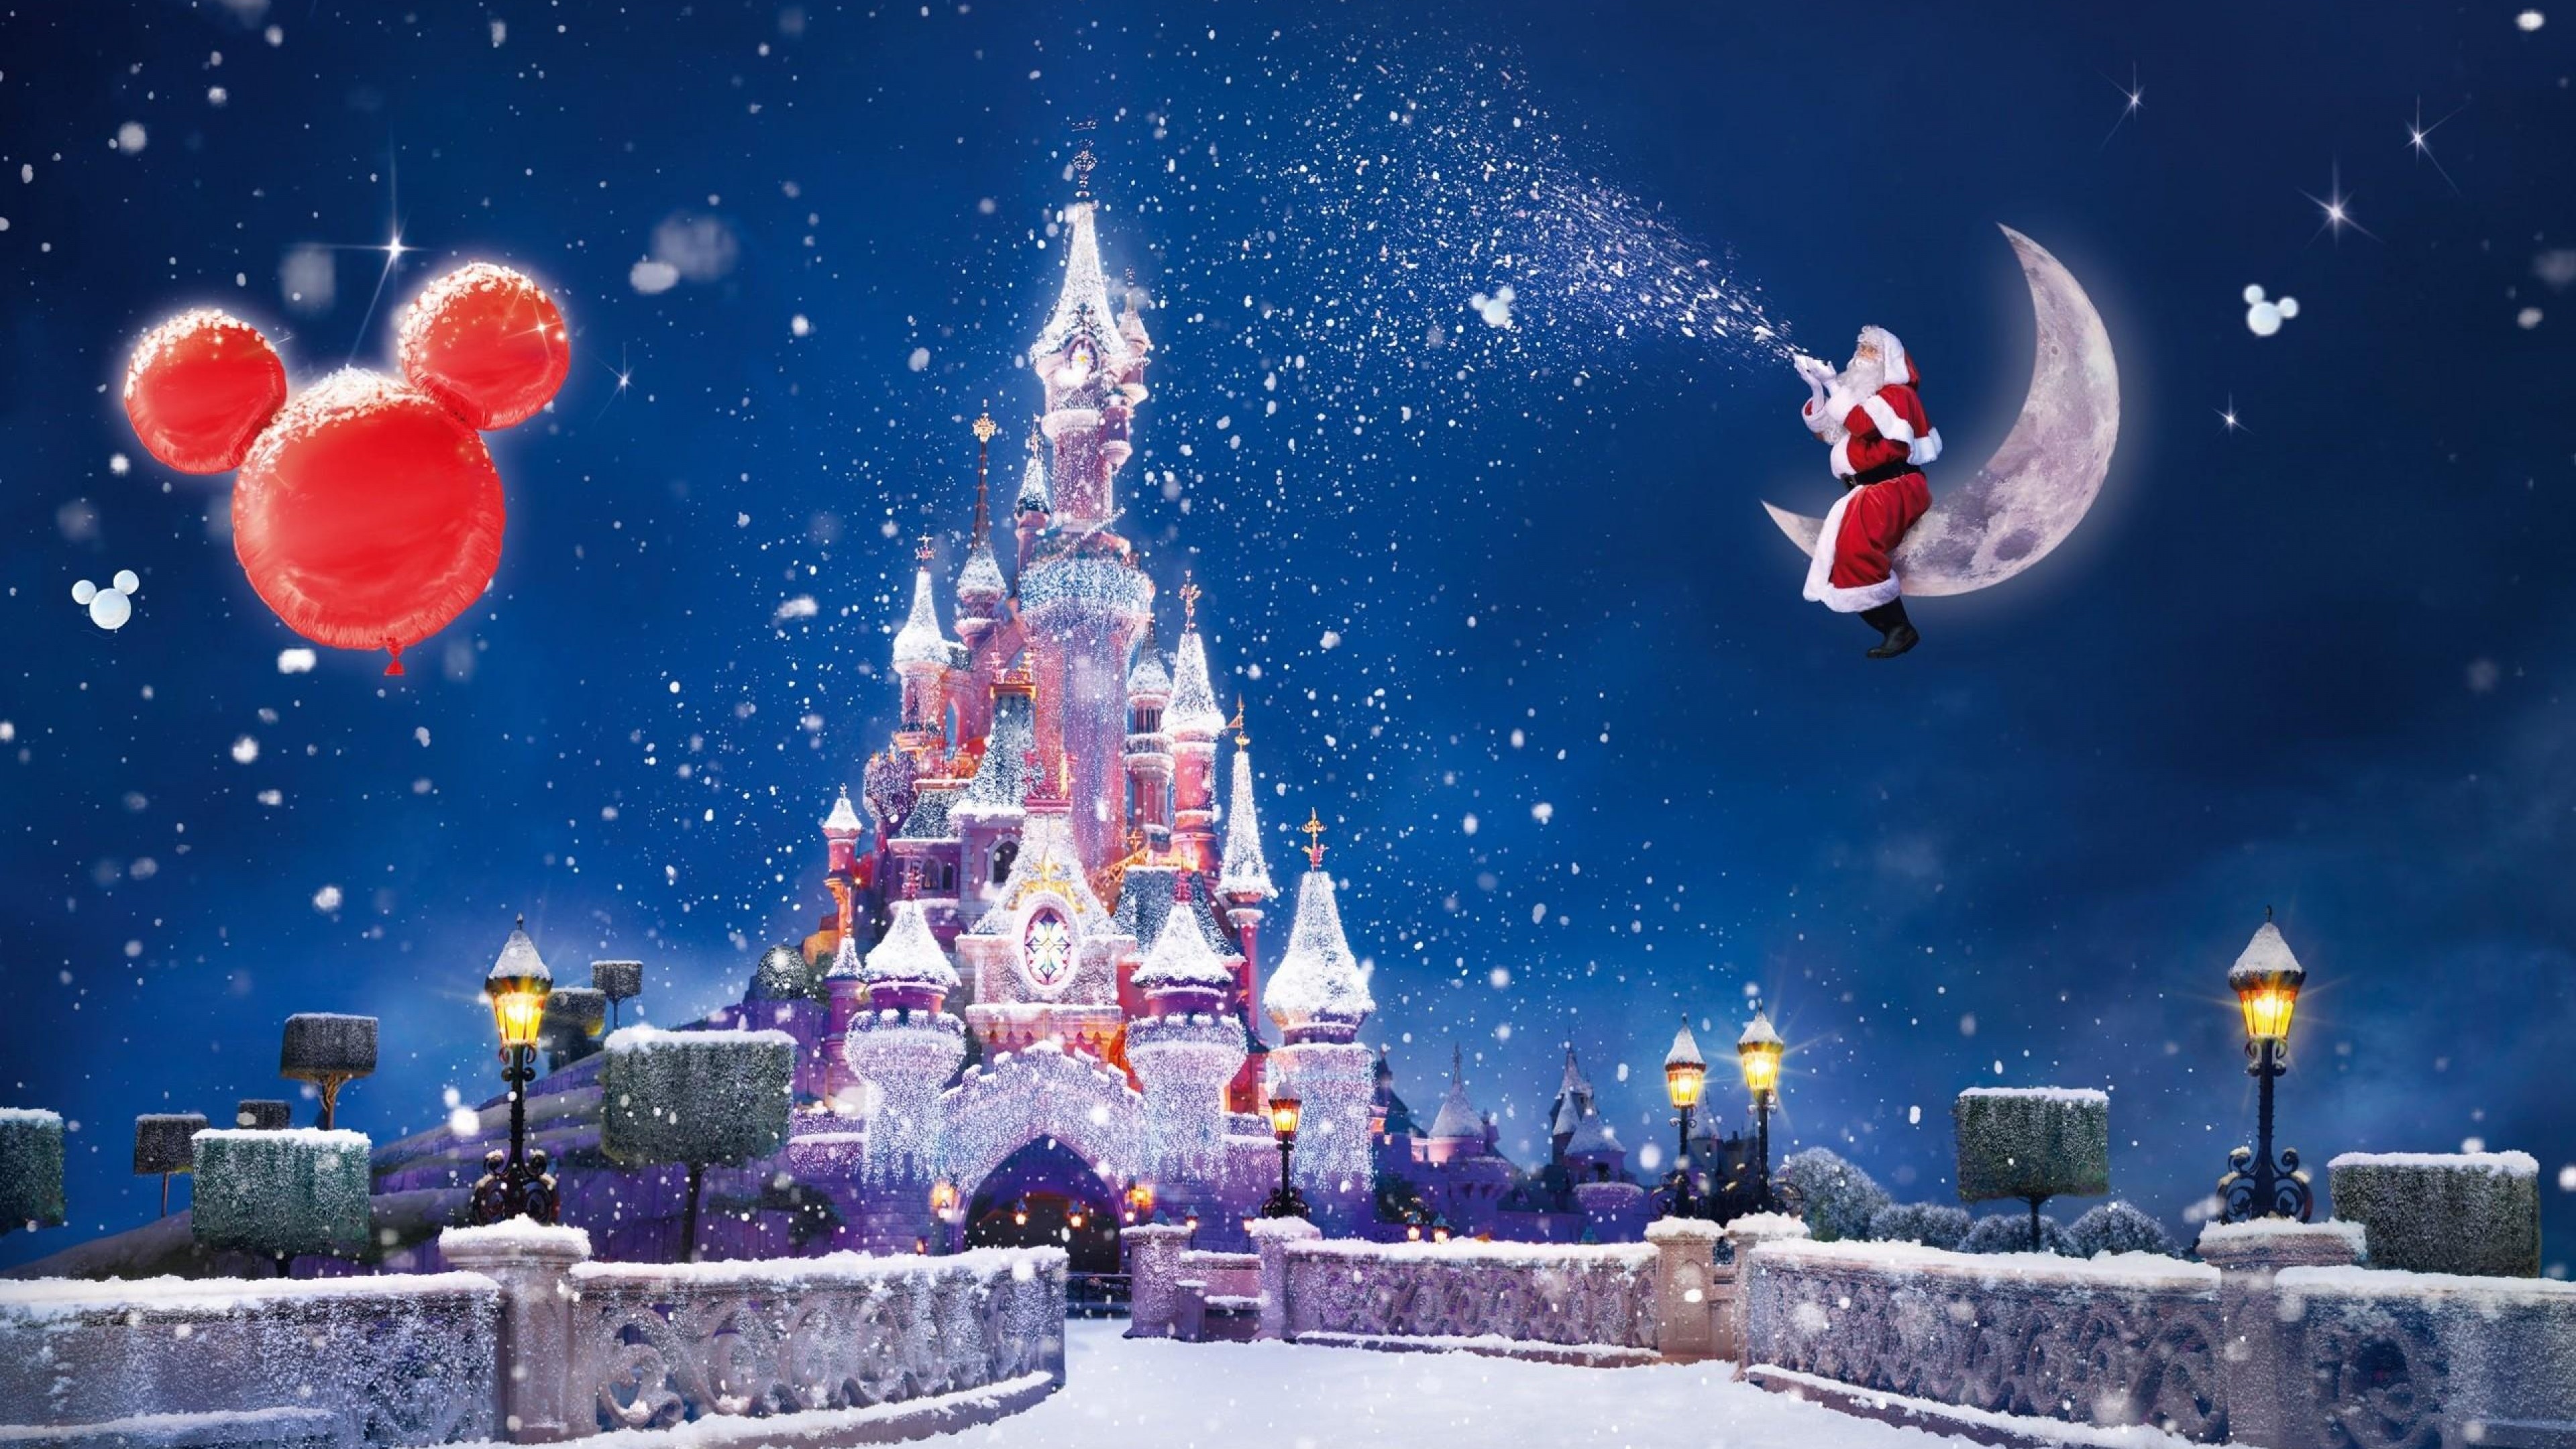 Christmas wallpaper background k ultra hd wallpaper santa claus magic moon snow castle balloons holiday